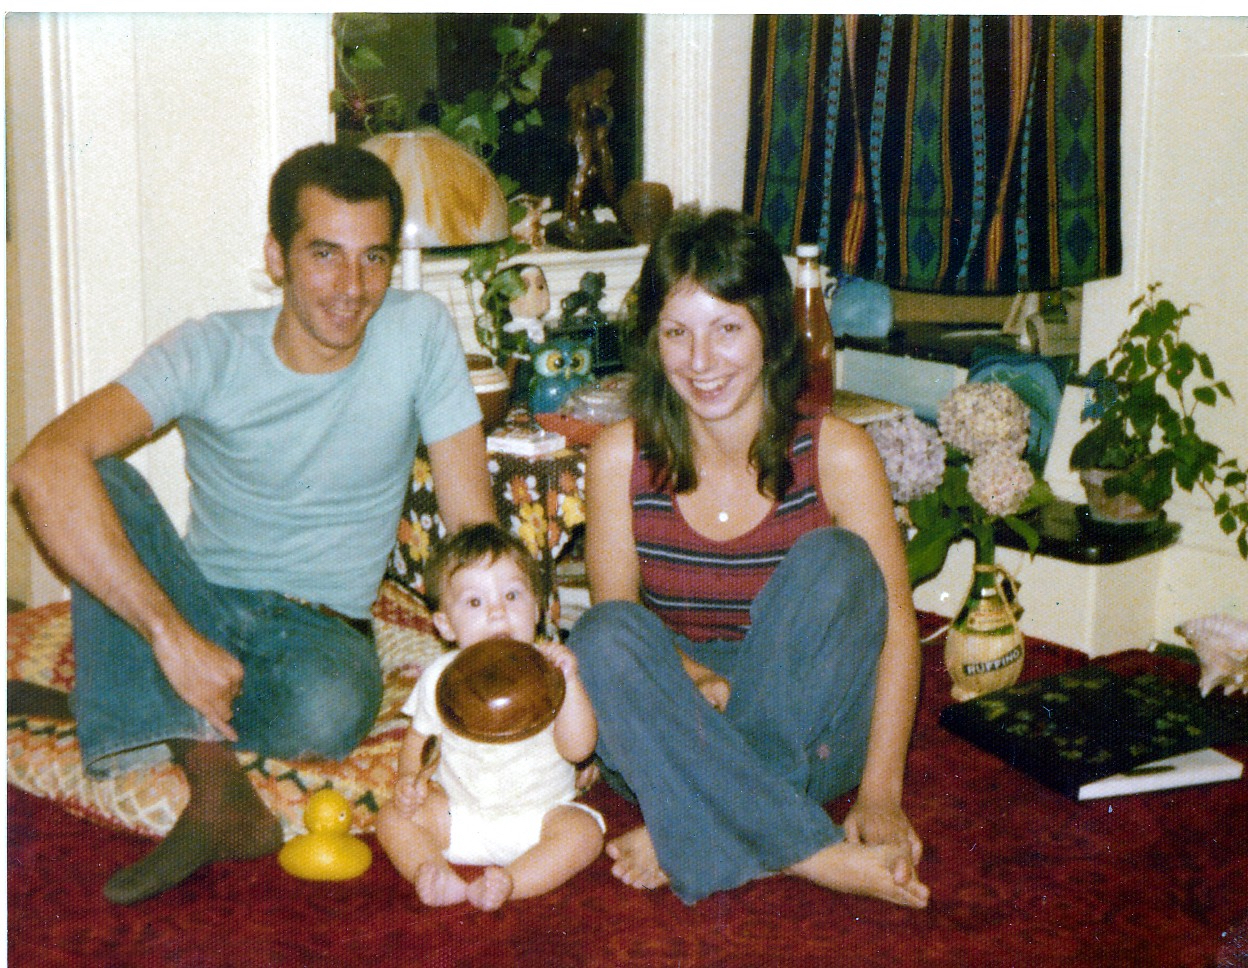 dark haired man, baby, woman sitting on floor